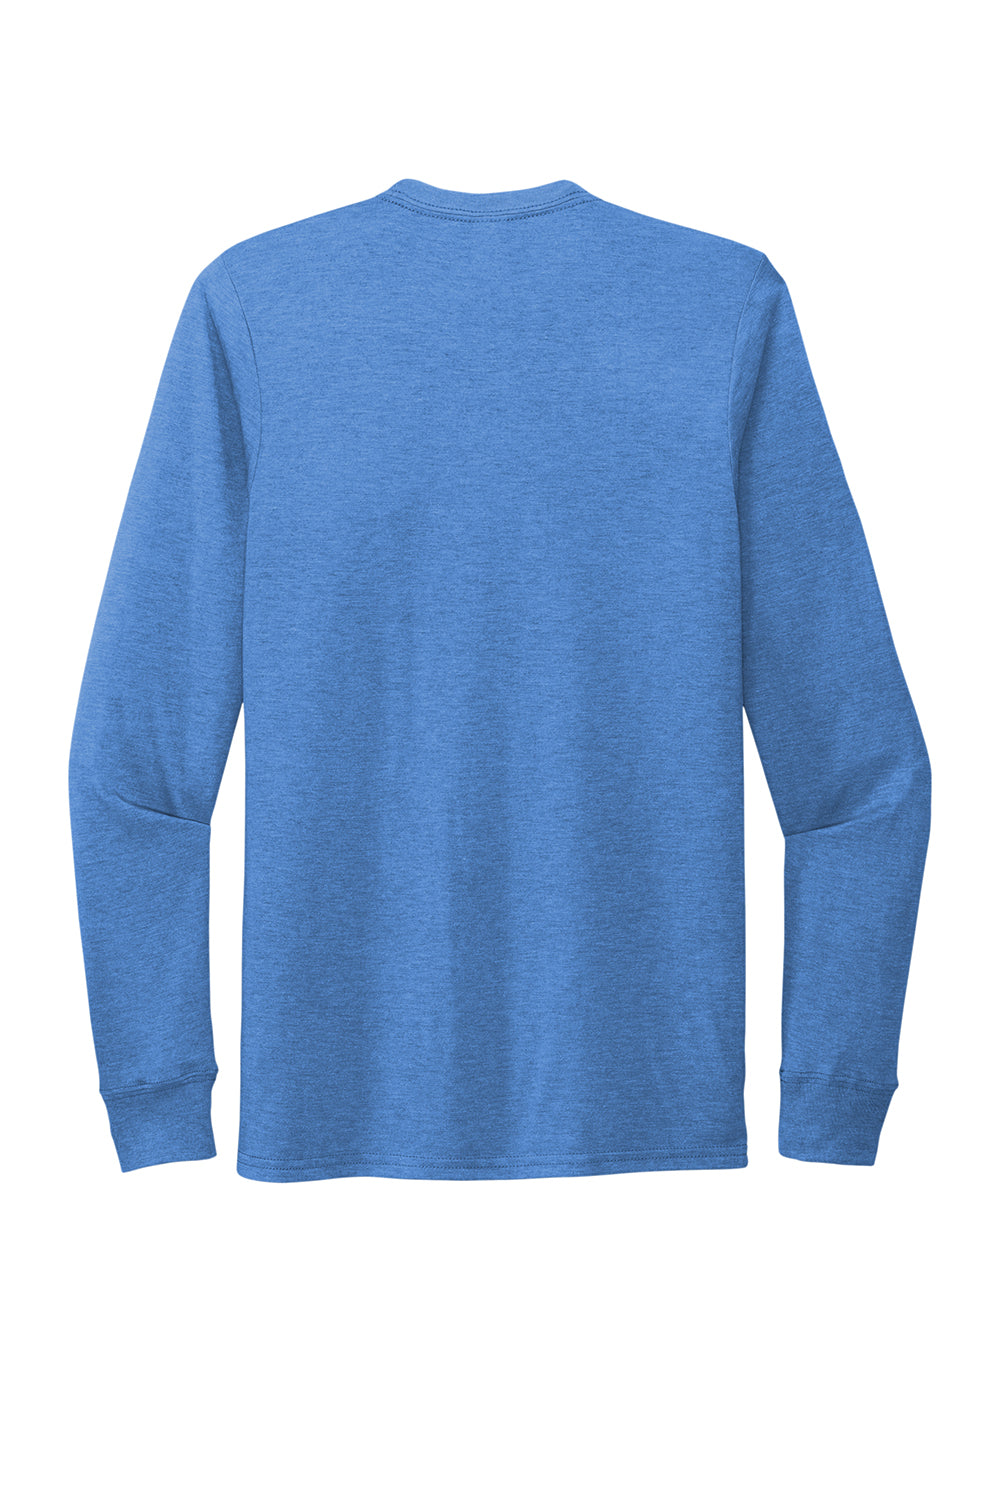 Allmade AL6004 Mens Long Sleeve Crewneck T-Shirt Azure Blue Flat Back